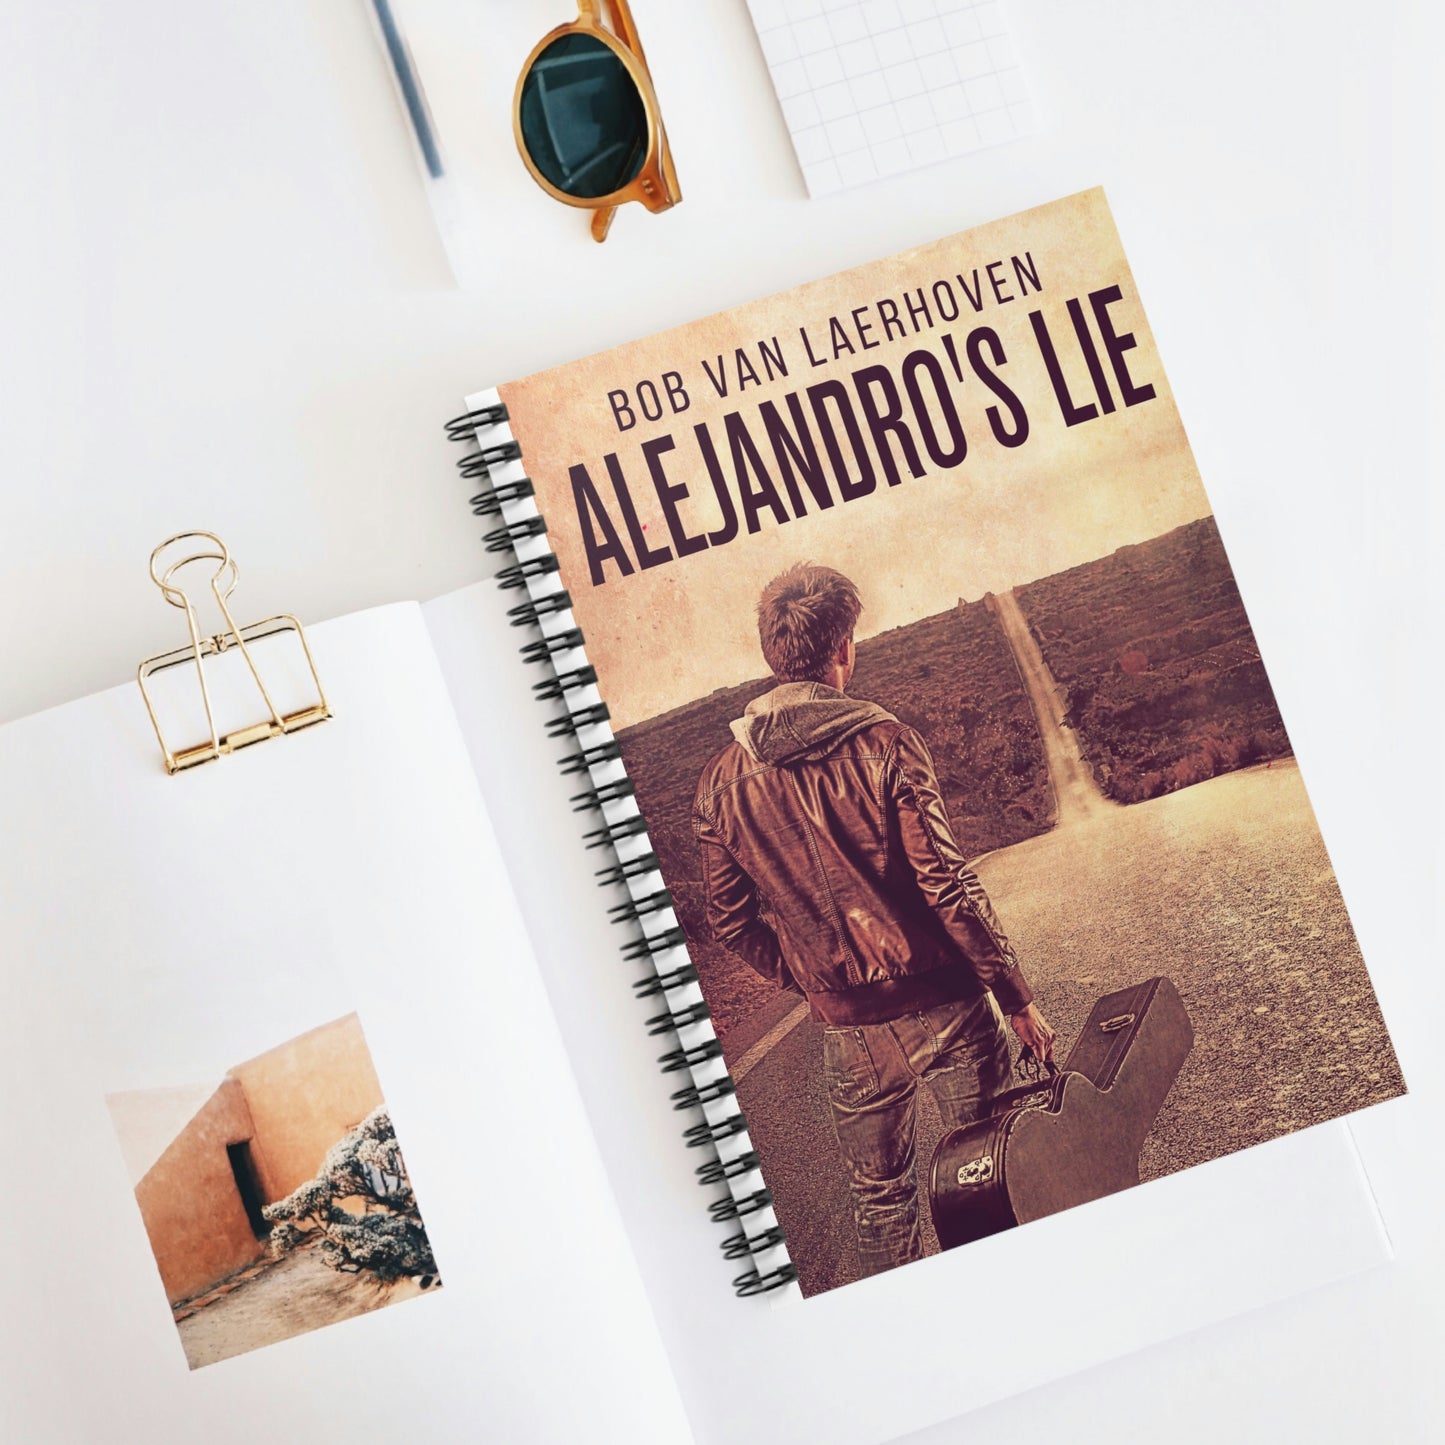 Alejandro???s Lie - Spiral Notebook